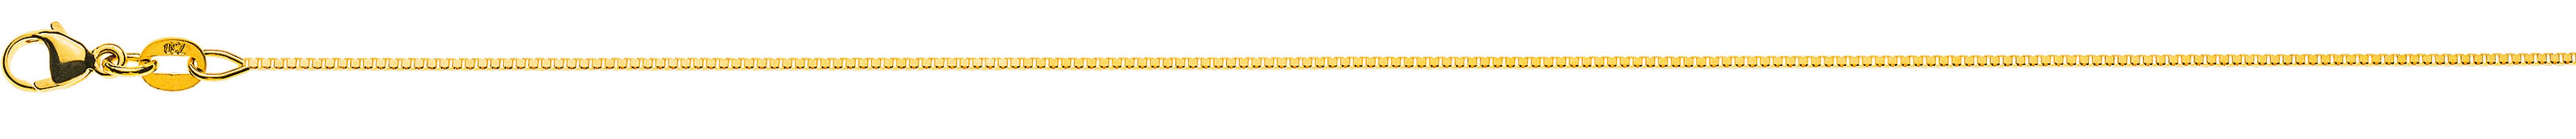 AURONOS Prestige Necklace yellow gold 18K Venetian chain diamond 45cm 0.8mm